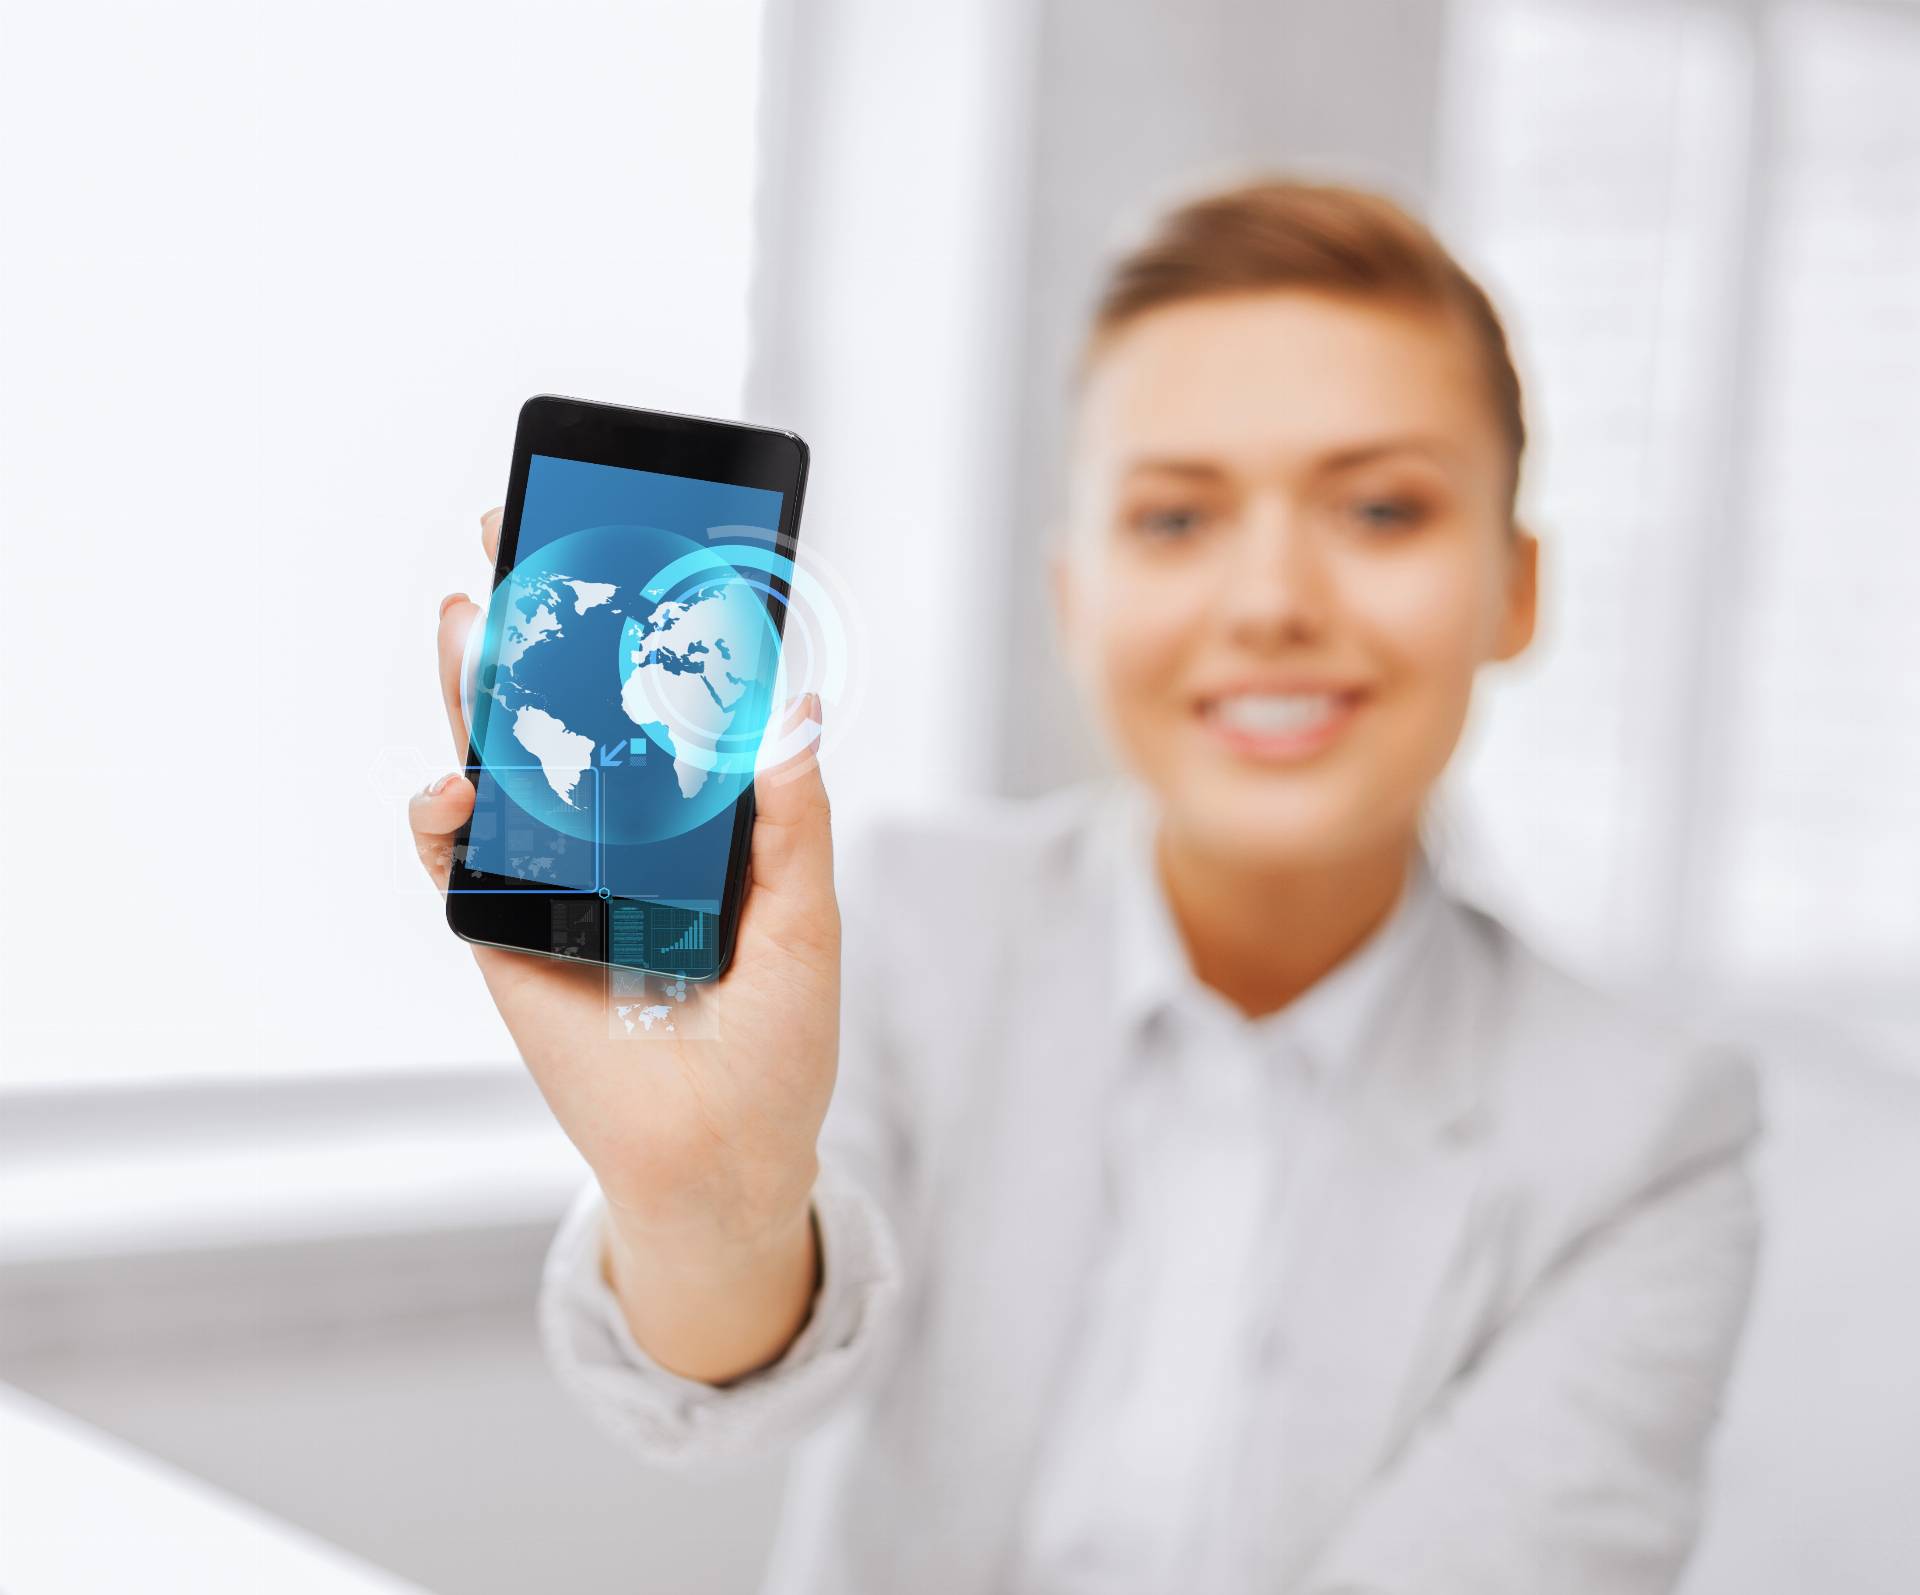 Frau streckt Handy mit Weltkugel auf dem Display entgegen